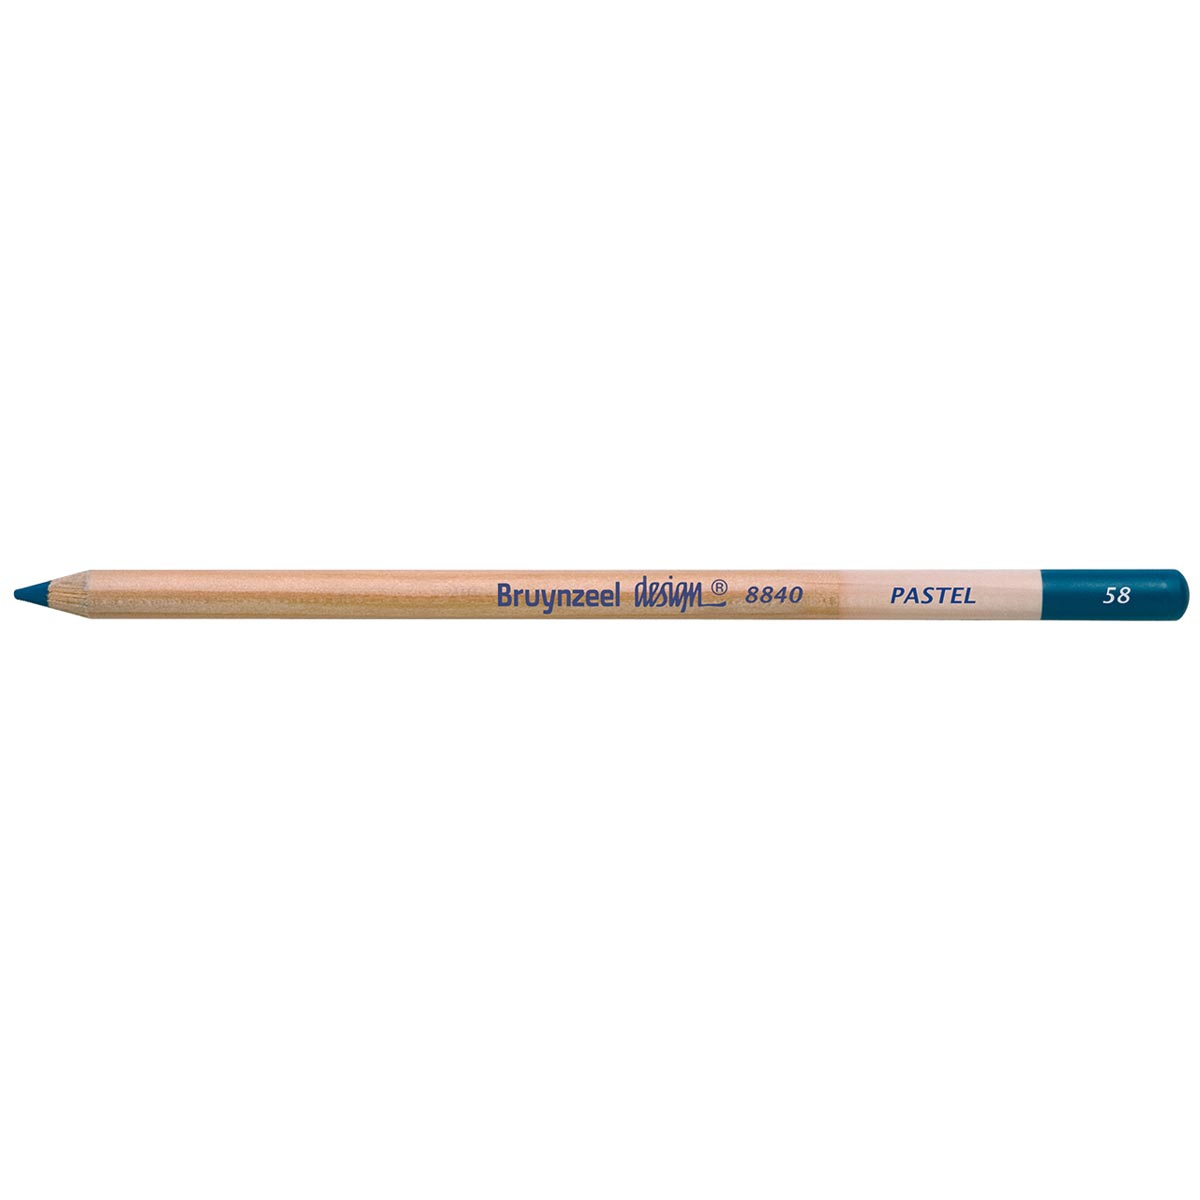 Bruynzeel Design Pastel Pencil - Prussian Blue 58